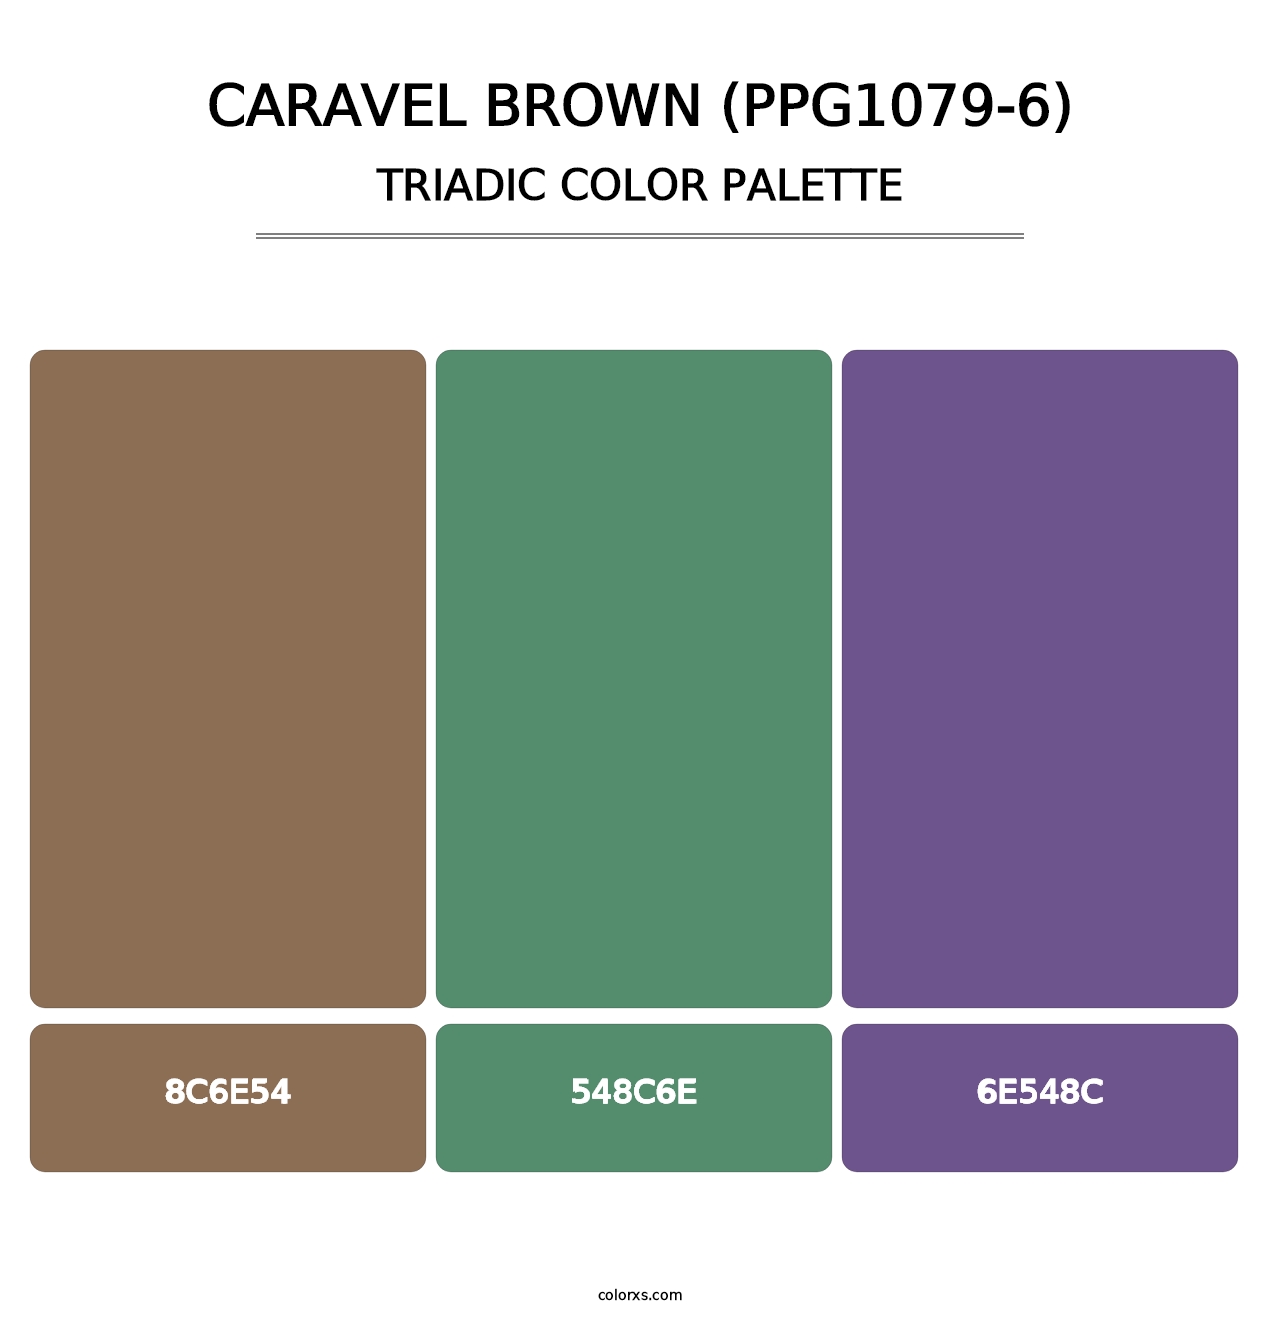 Caravel Brown (PPG1079-6) - Triadic Color Palette